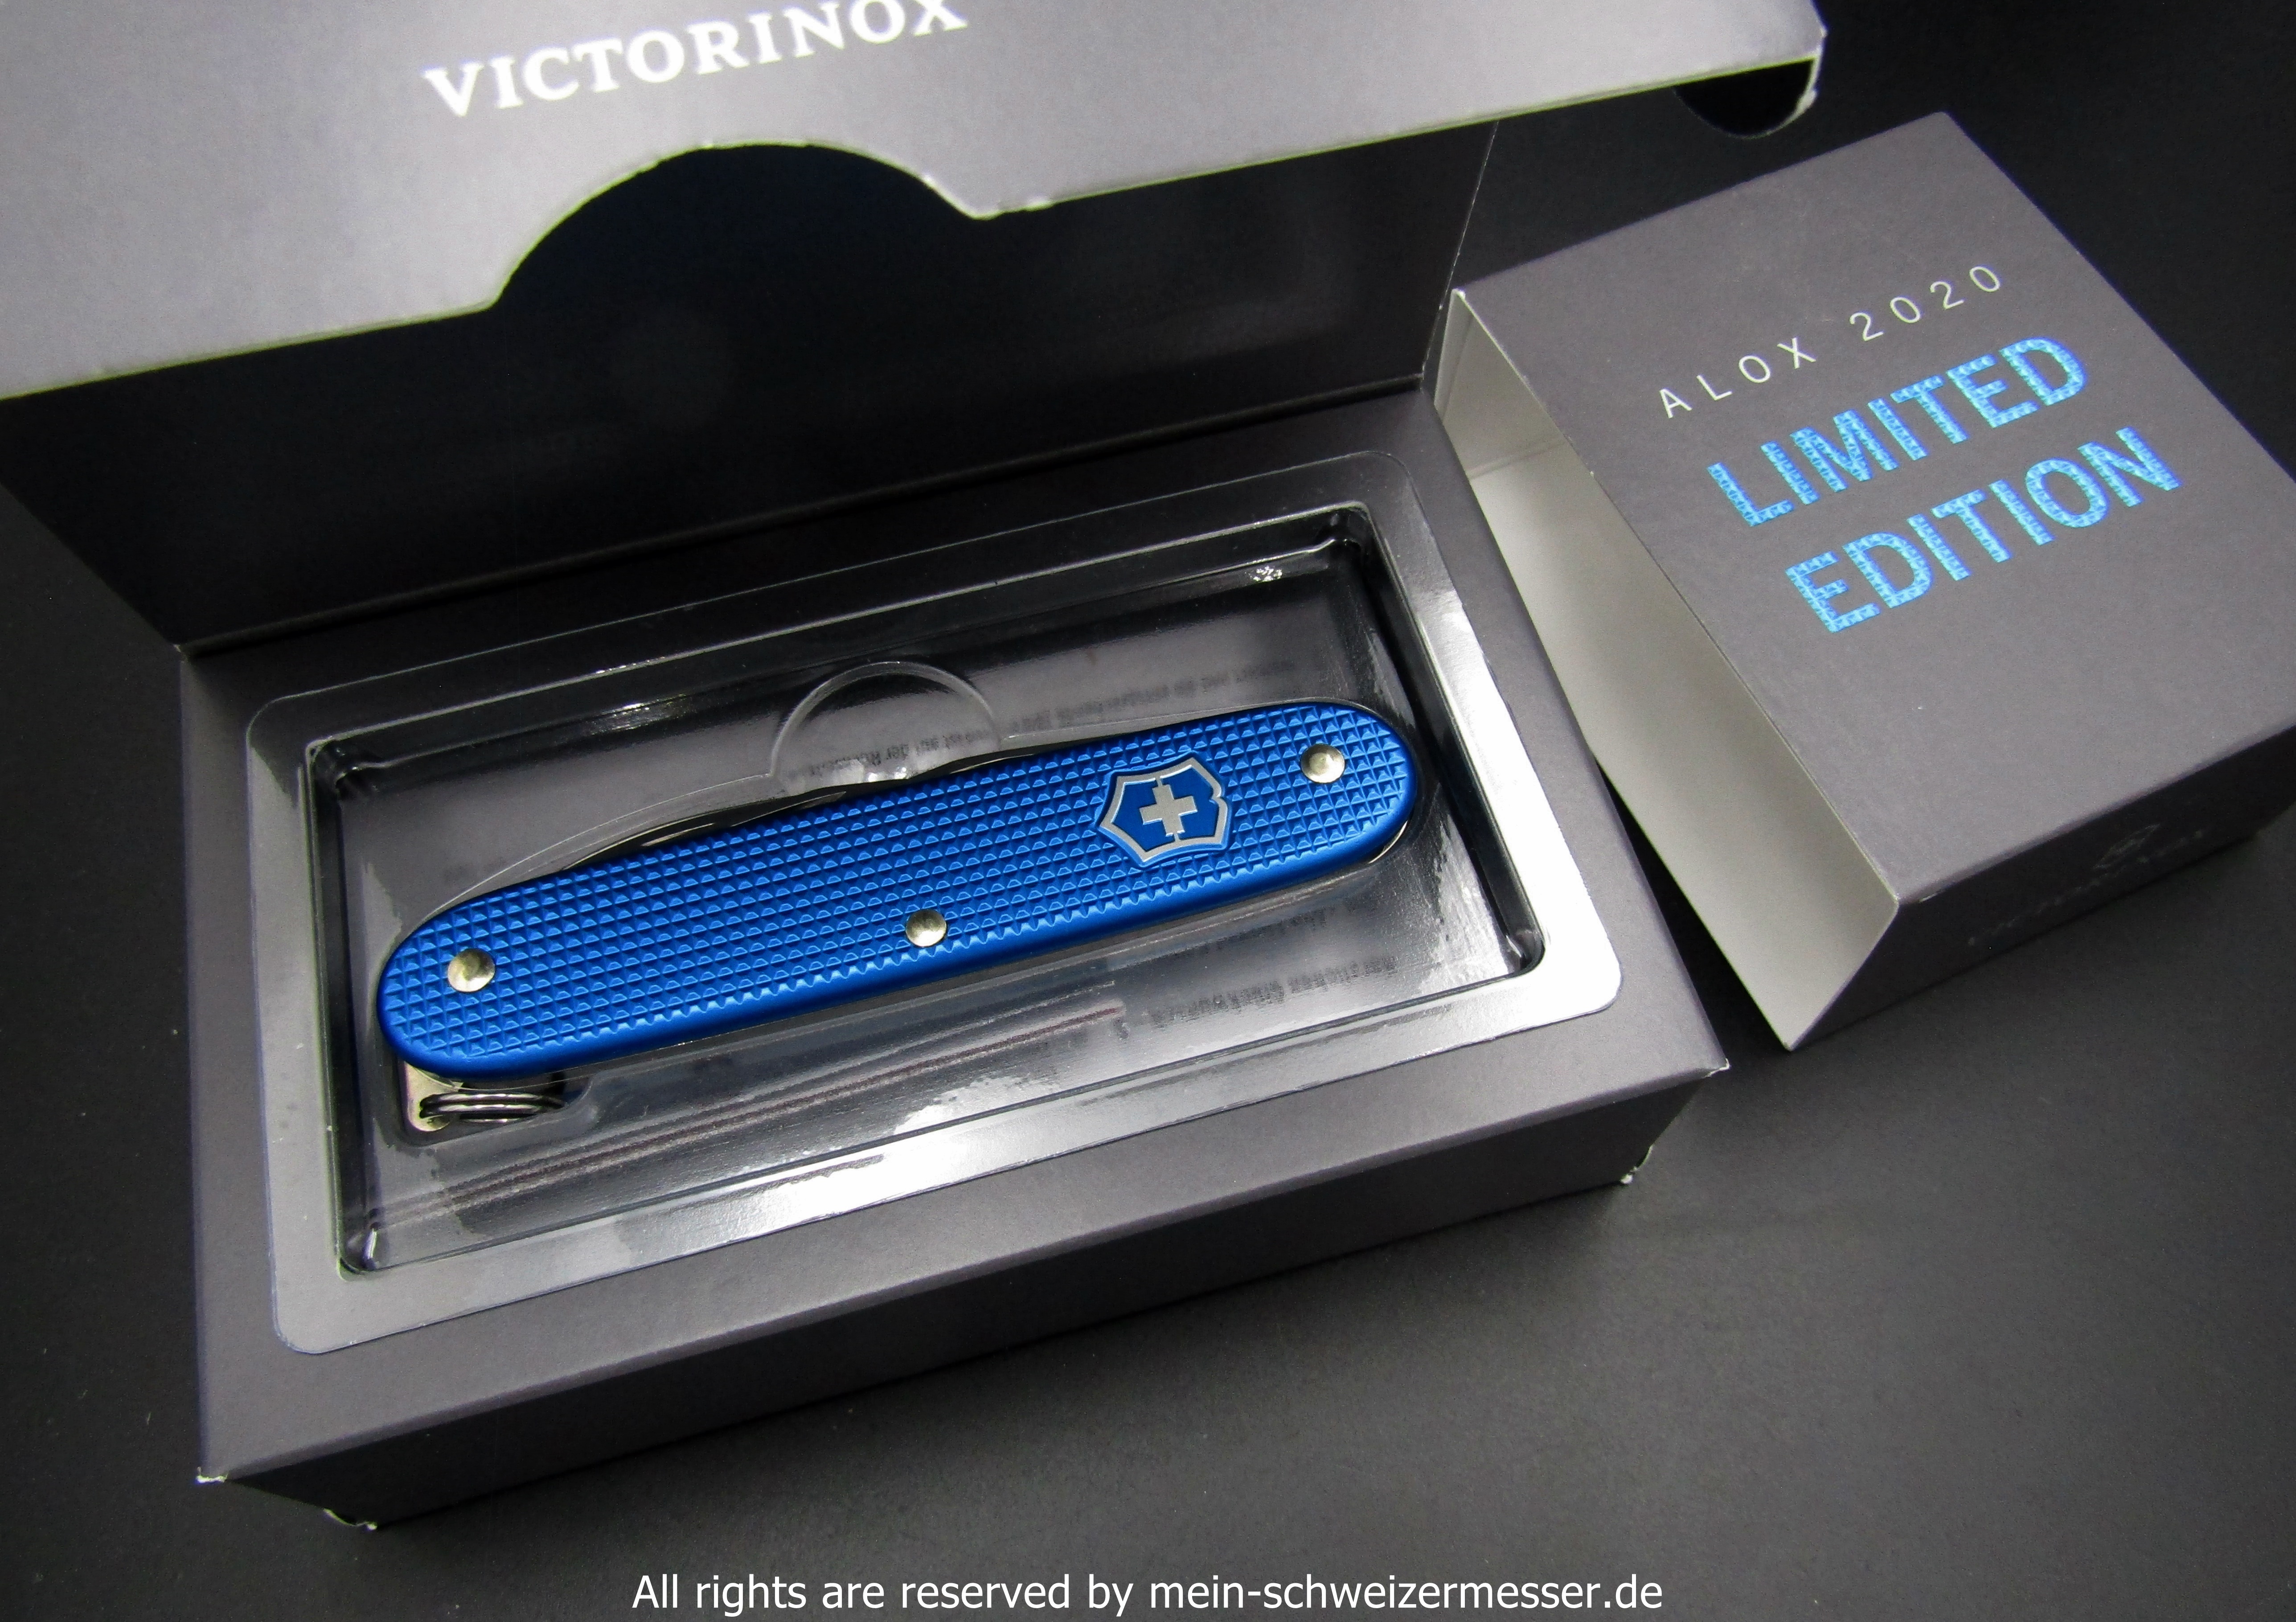 Victorinox Alox Limited Edition 2020